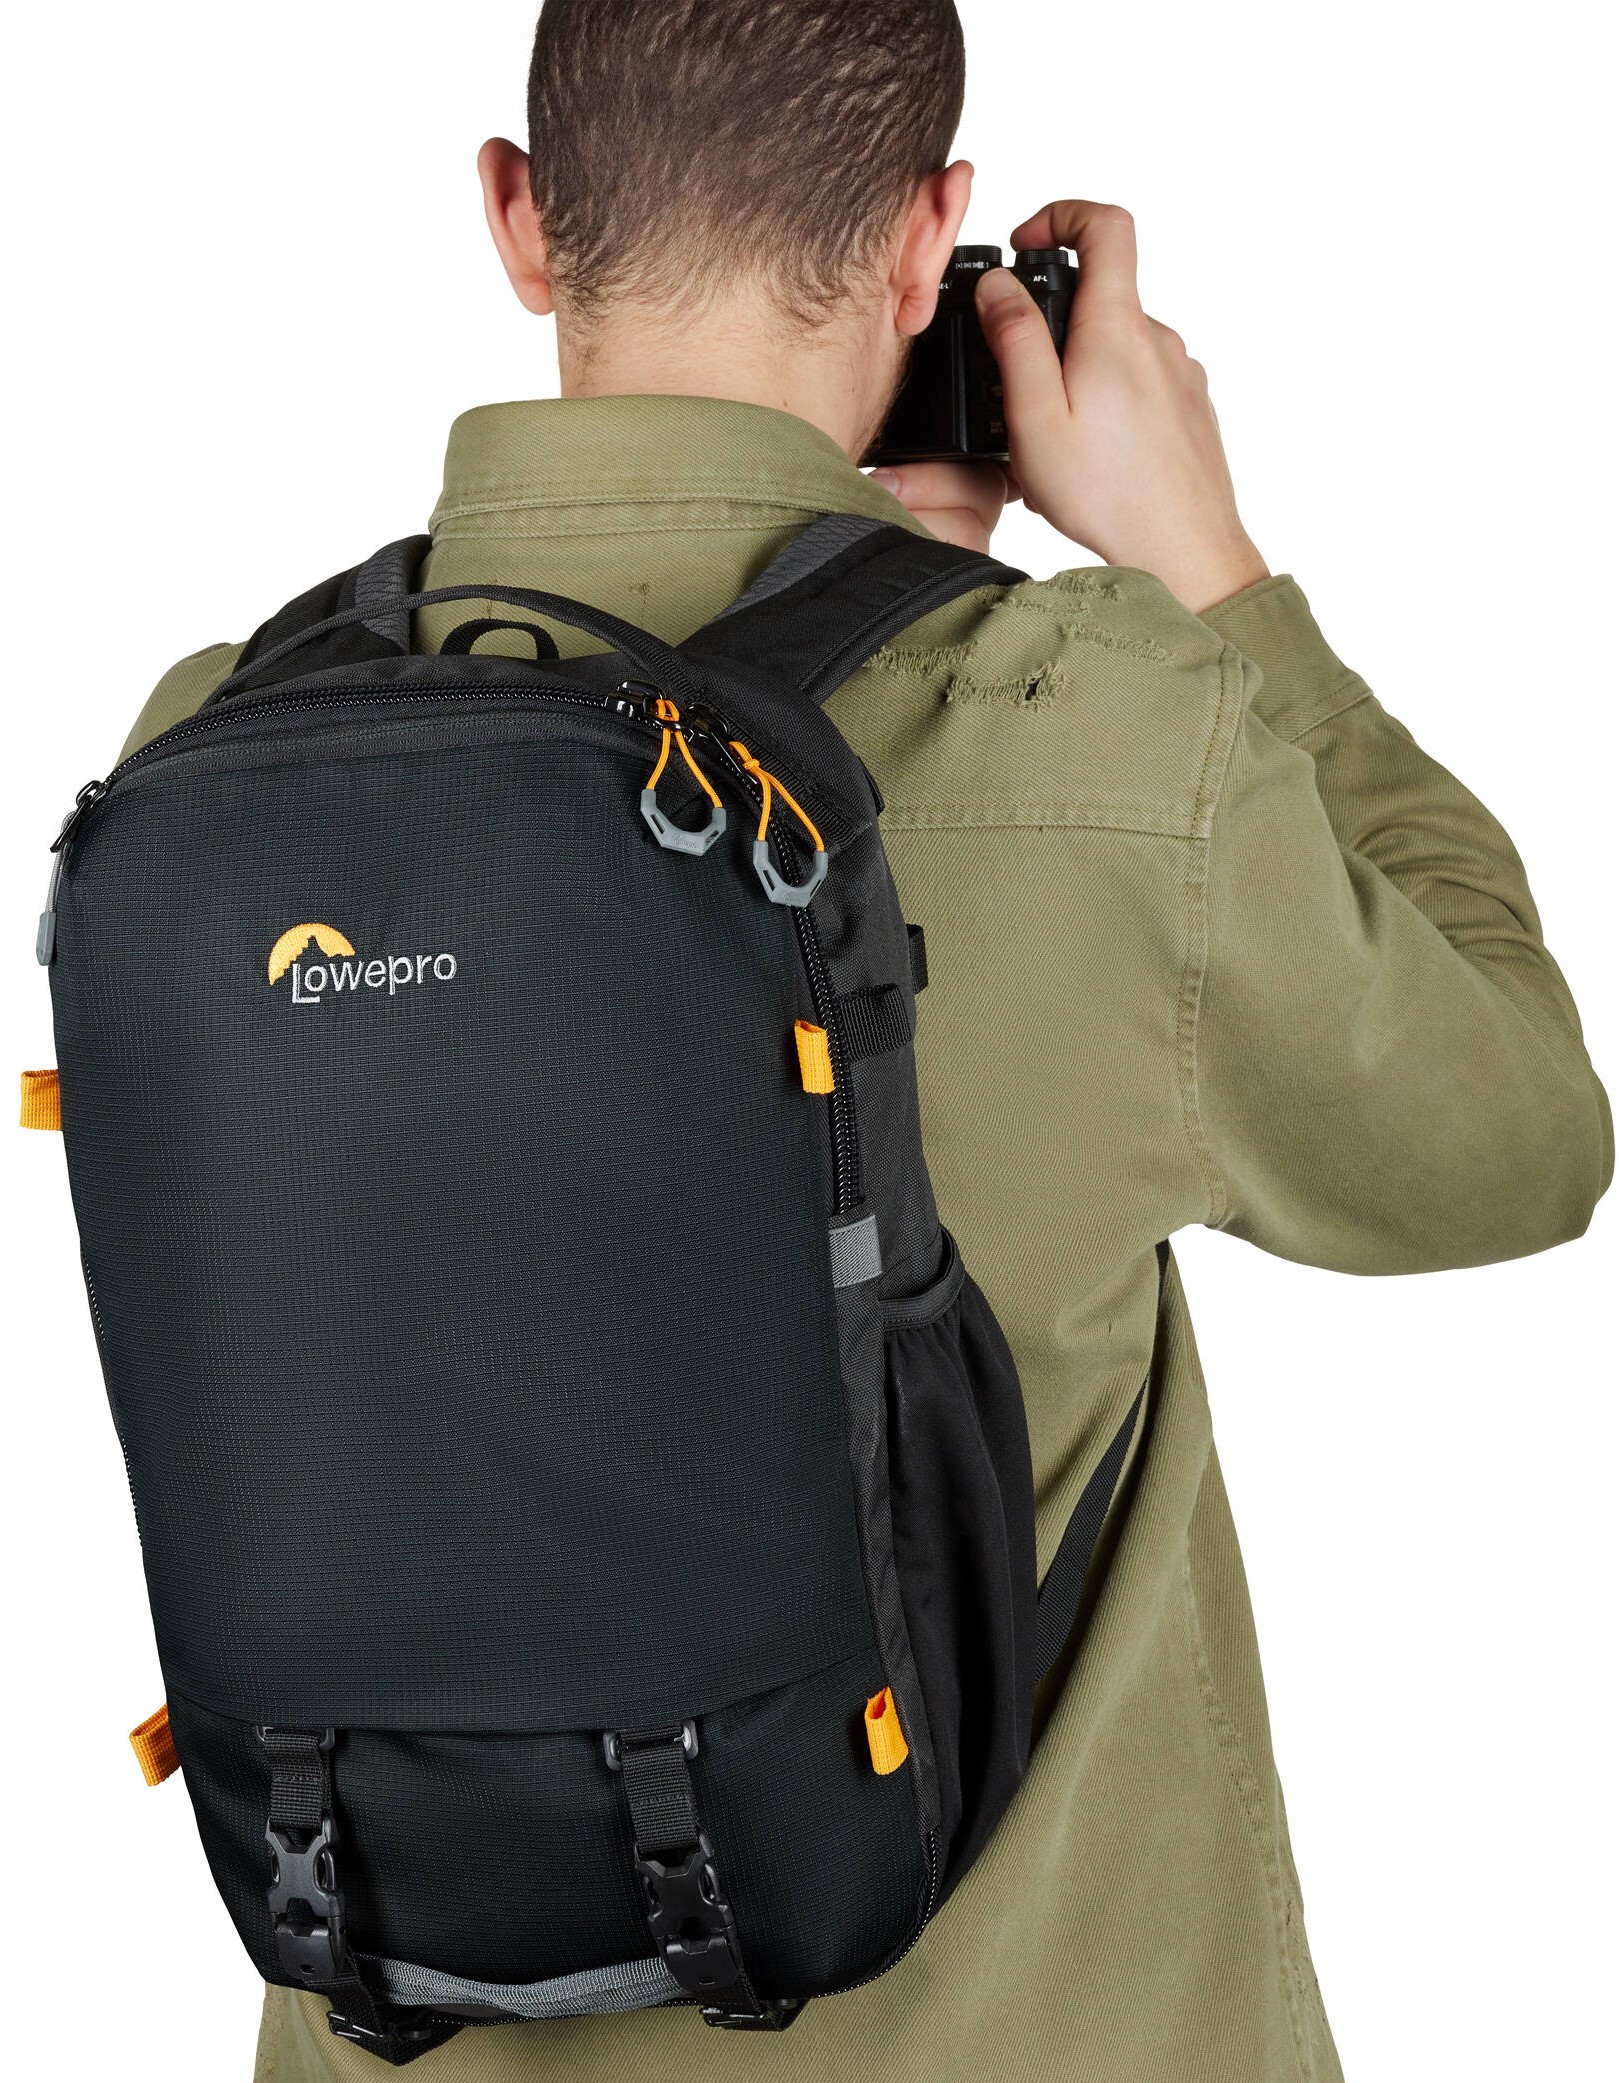    Backpack Lowepro TrekkerLite BP 150 AW Black